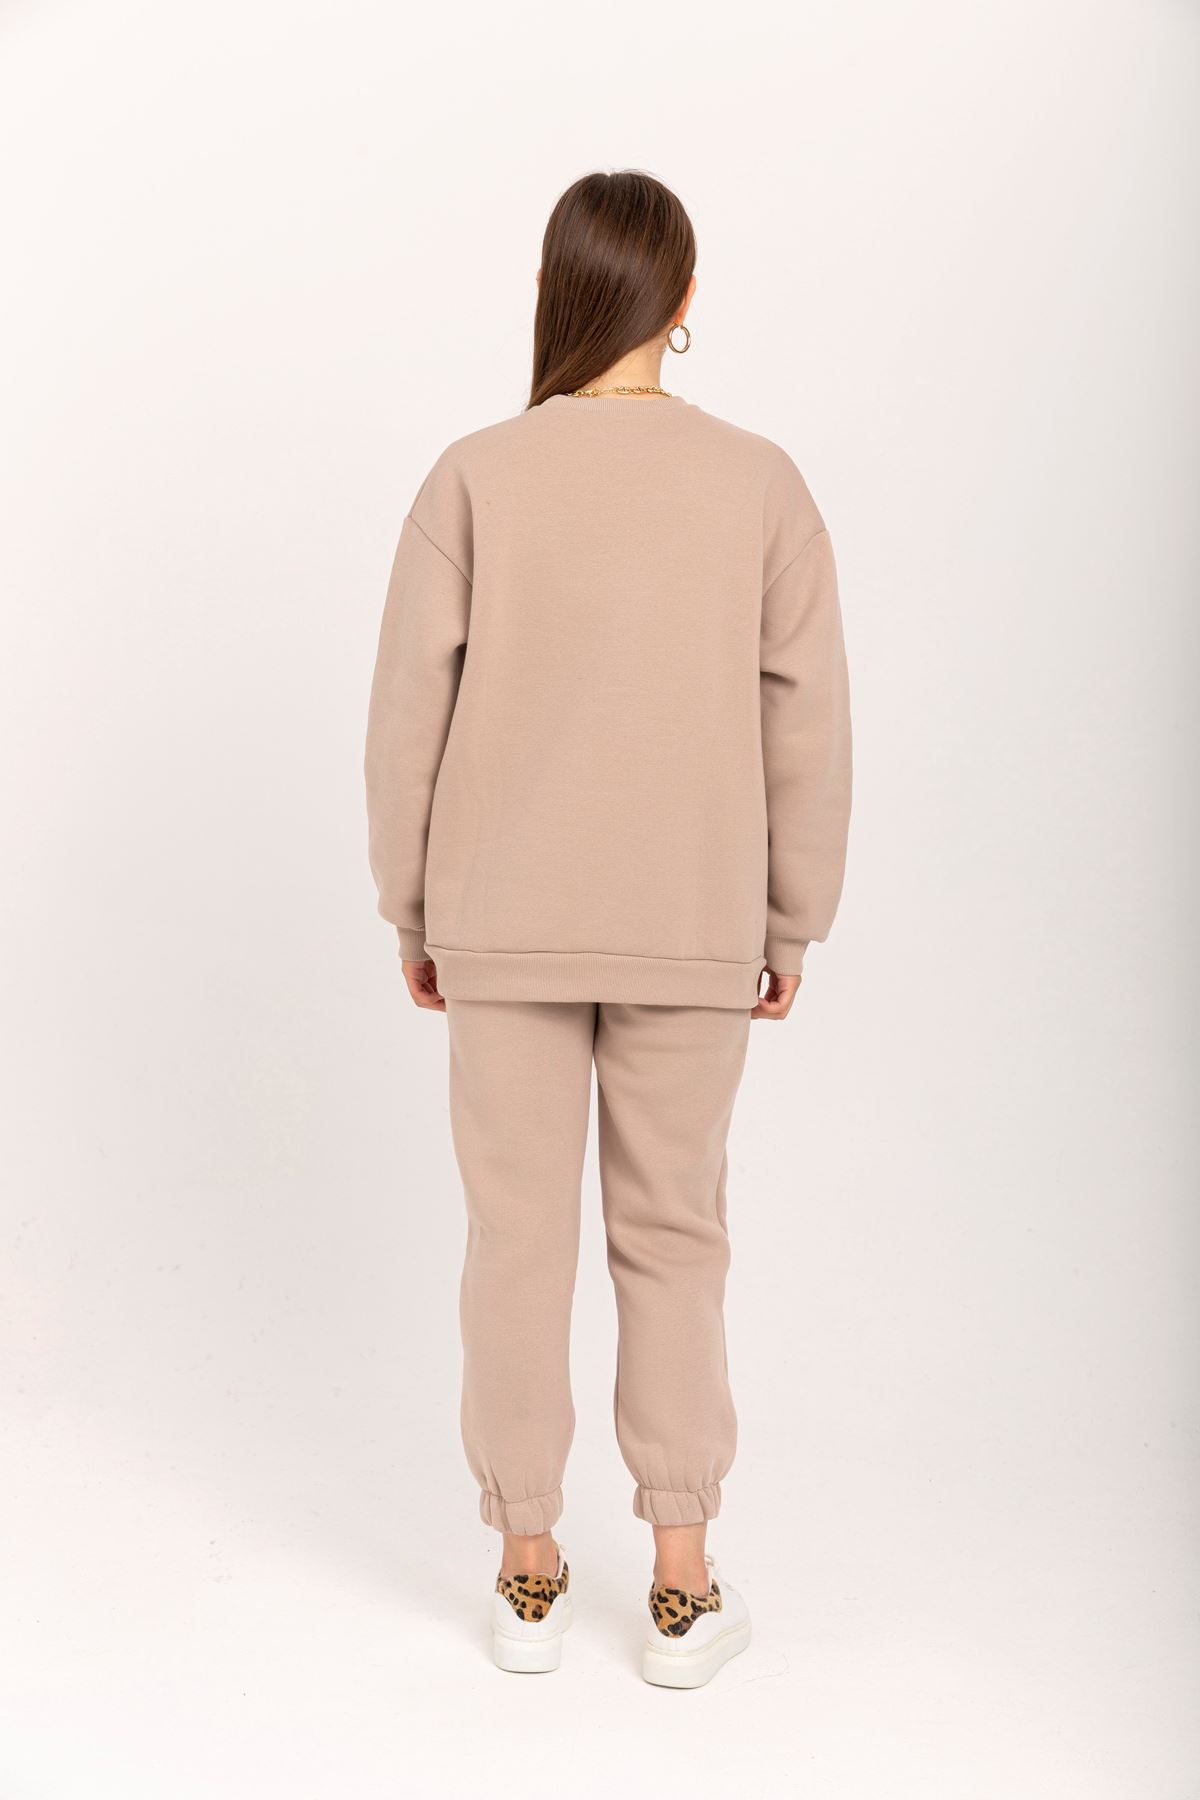 Third Knit With Wool İnside Fabric Long Sleeve Below Hip Women Sweatshirt - Beige 